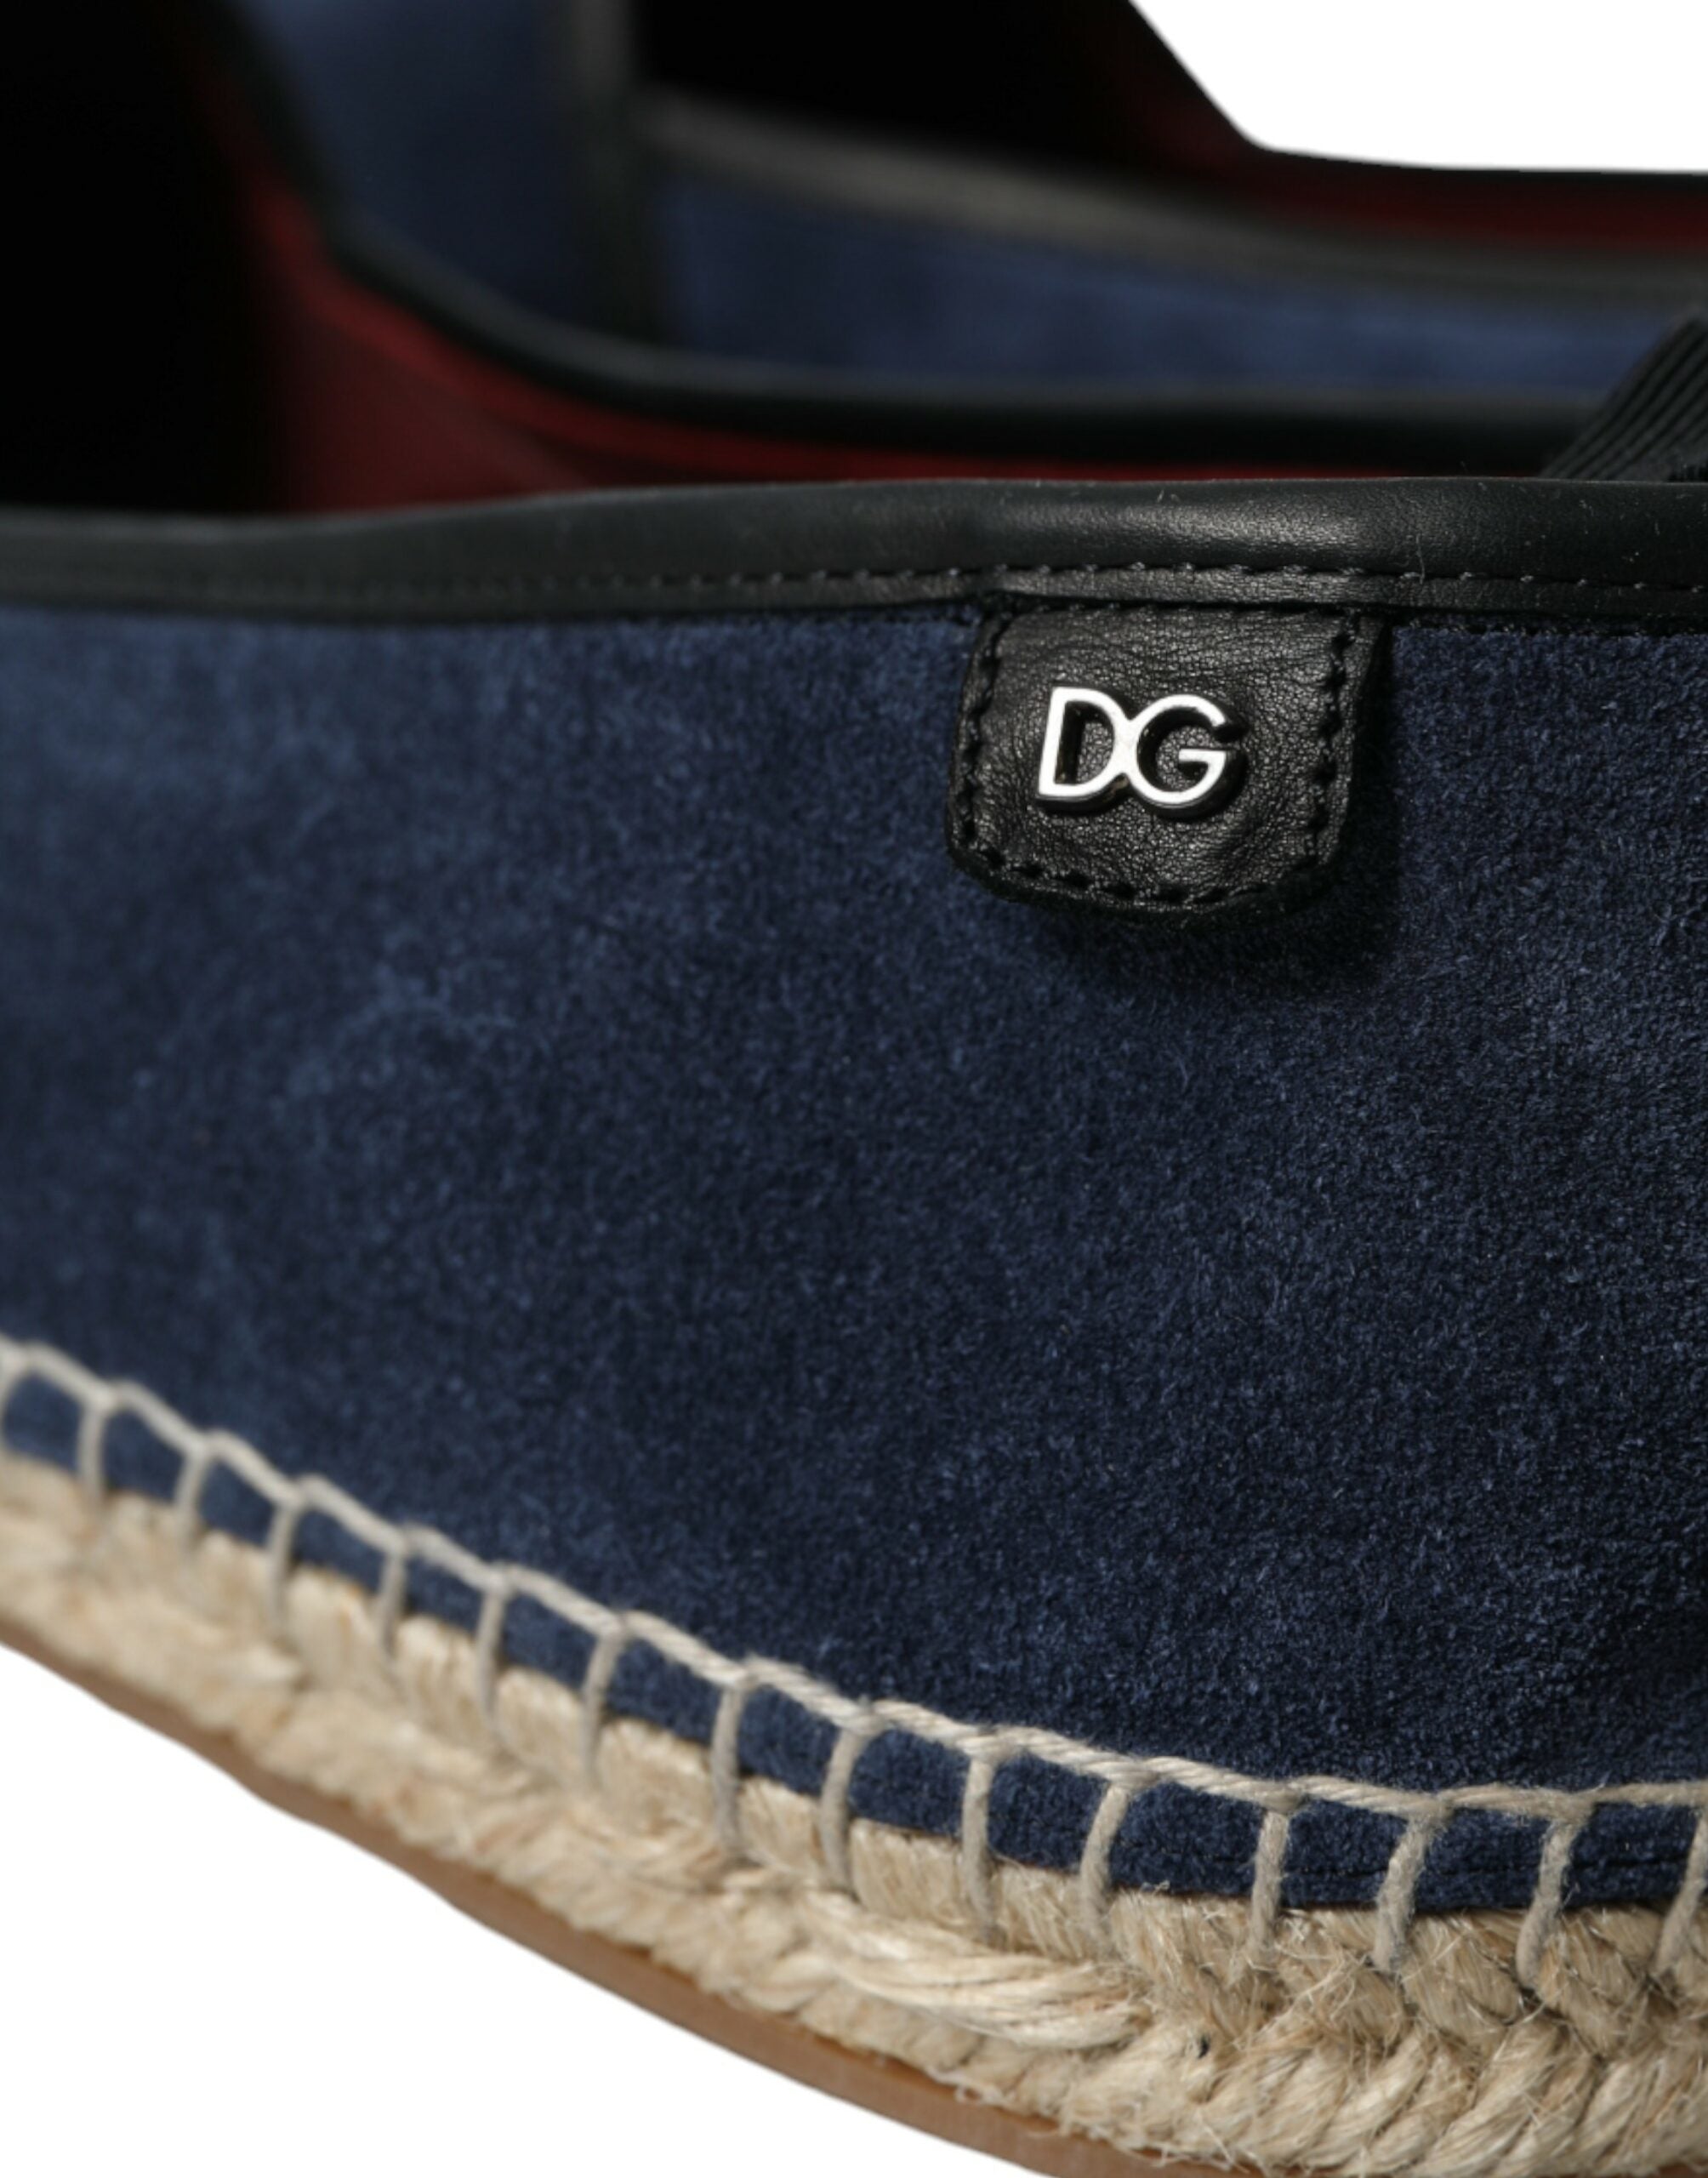 Dolce & Gabbana Zapatos de alpargata sin cordones de ante de cuero azul